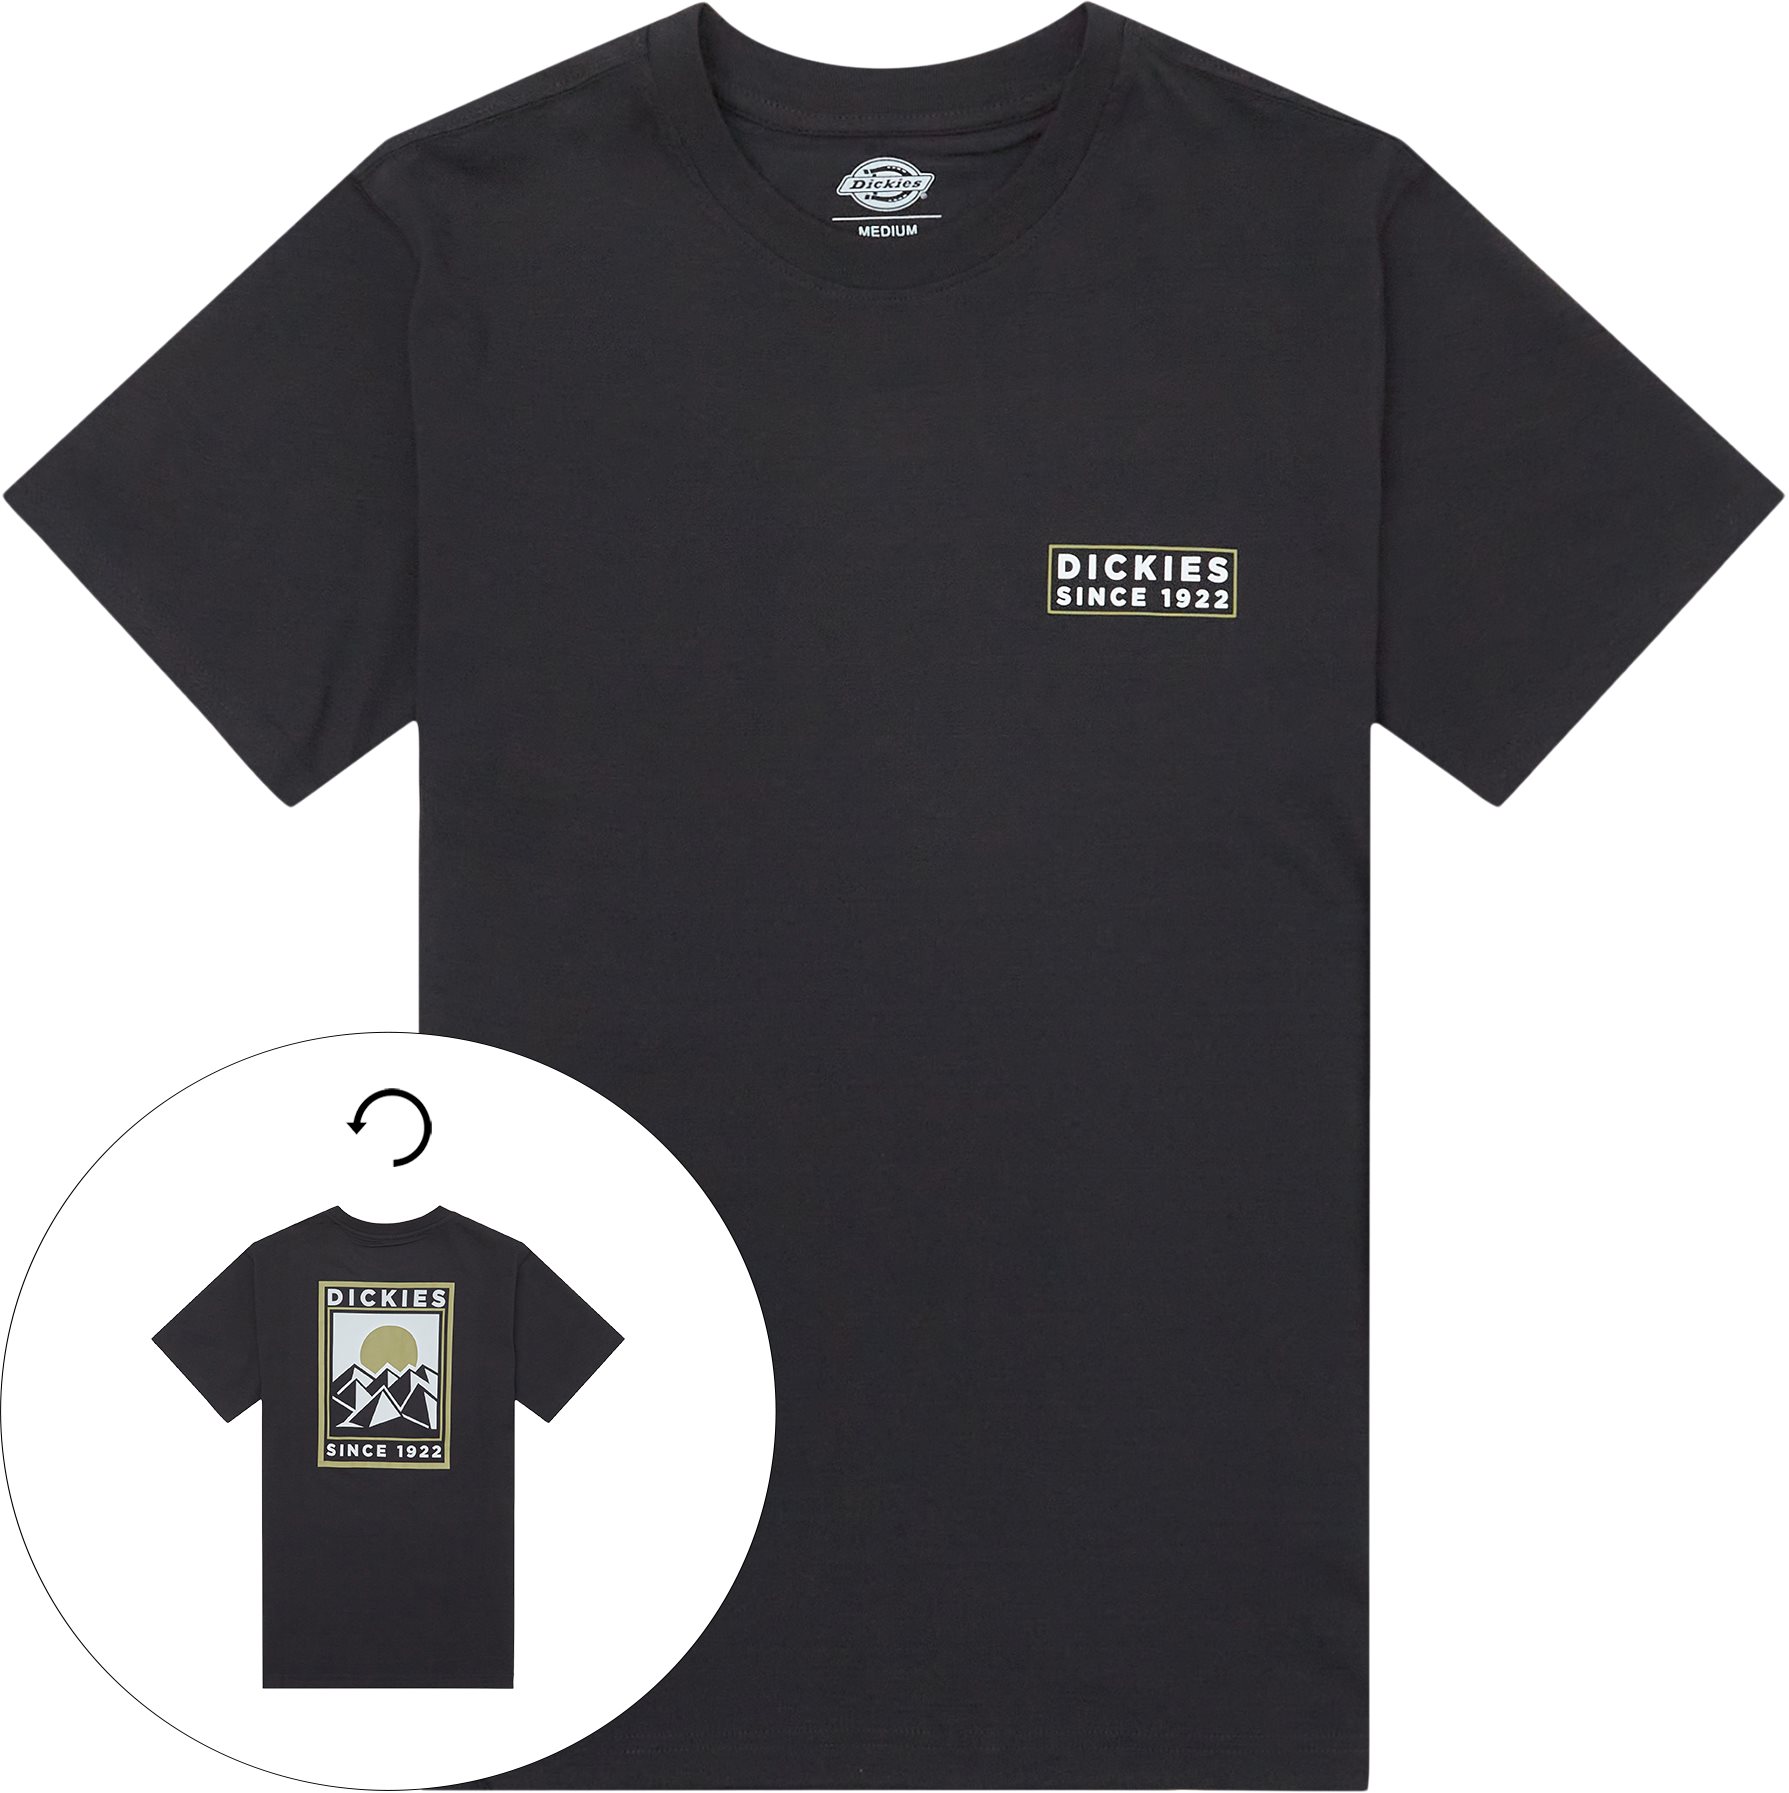 Pacific Tee - T-shirts - Regular fit - Black